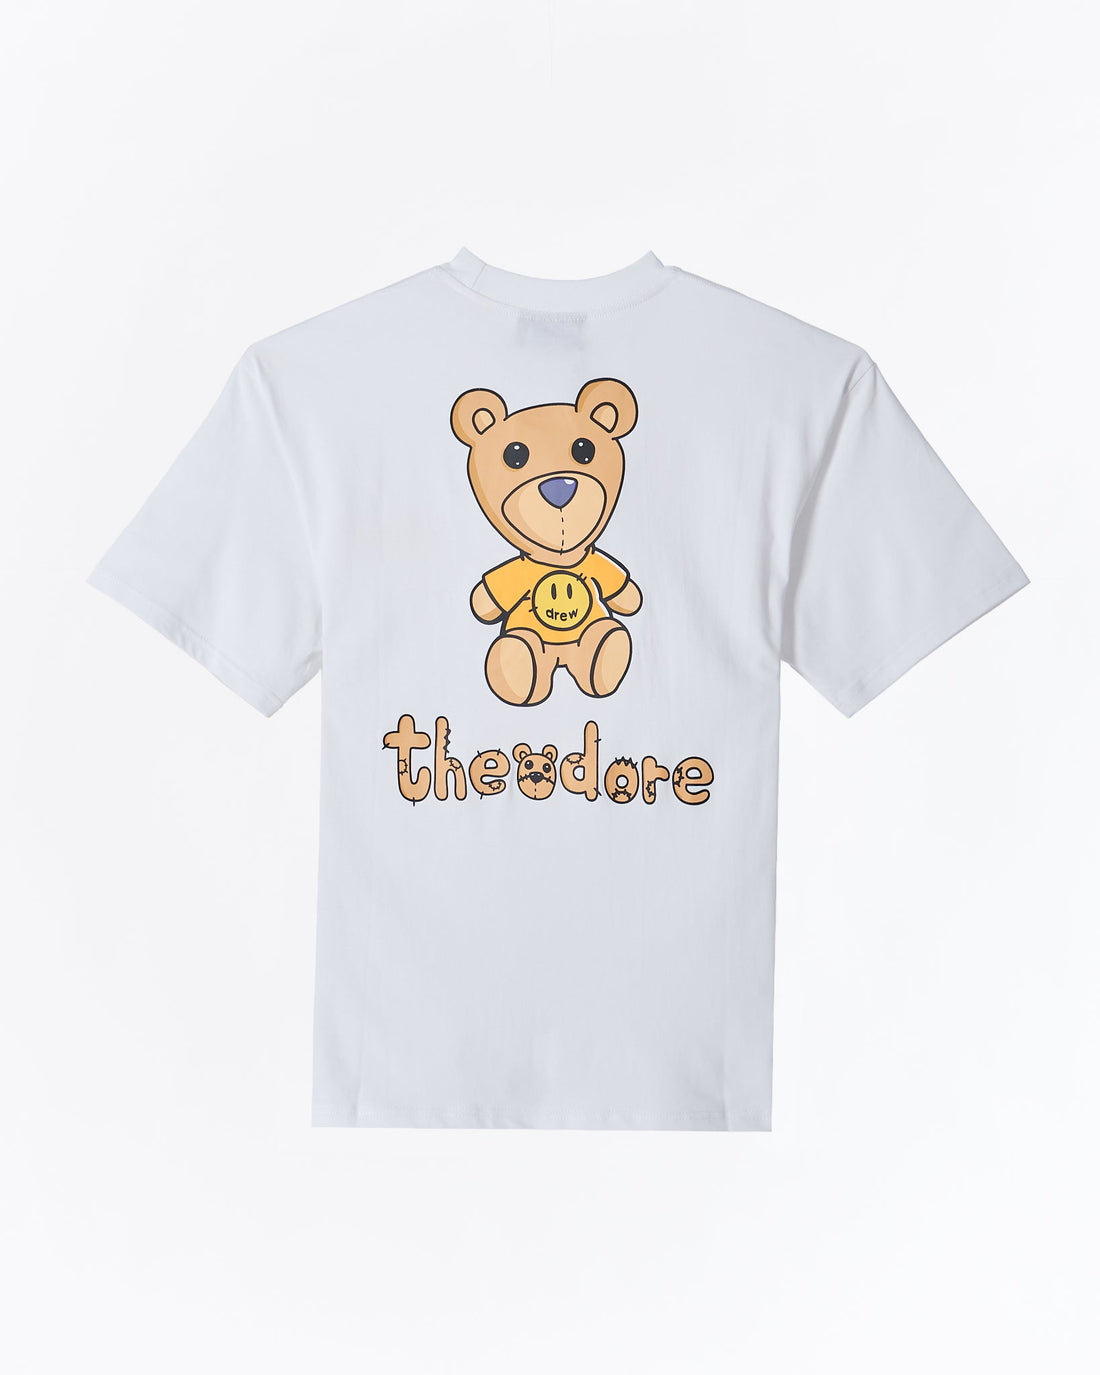 MOI OUTFIT-DRE Teddy Bear Back Unisex White T-Shirt 19.90